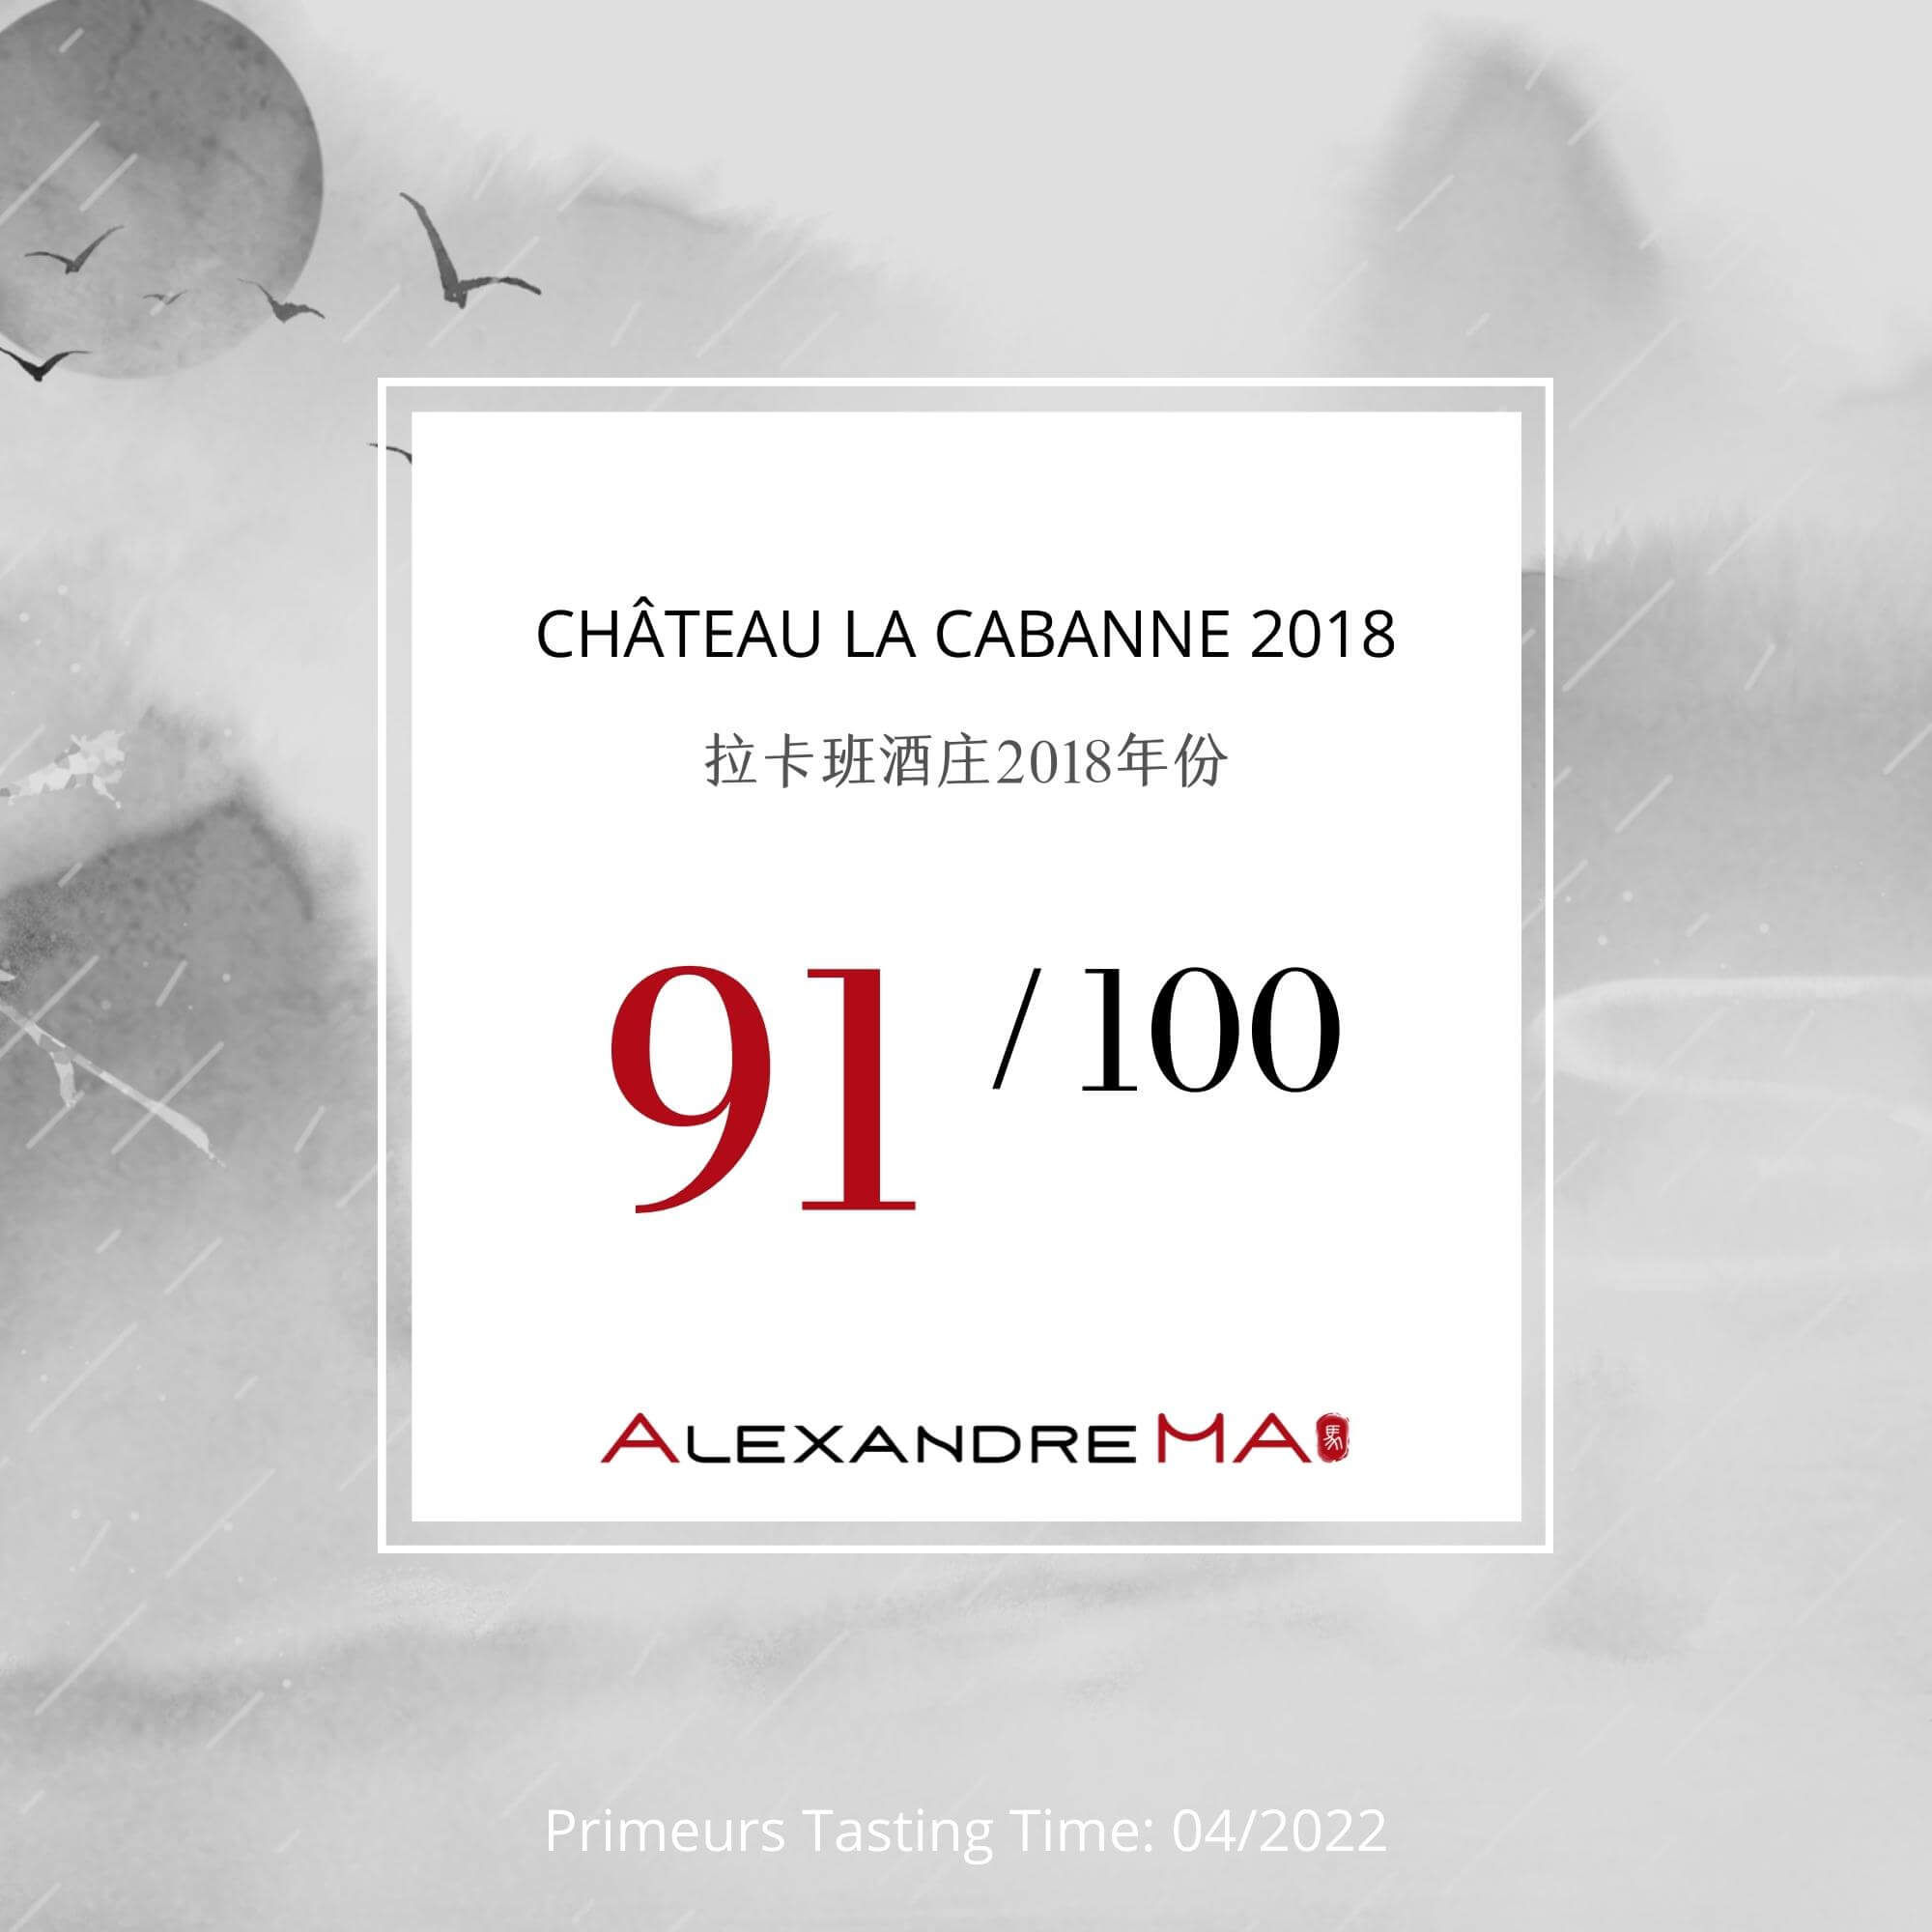 Château La Cabanne 2018 - Alexandre MA